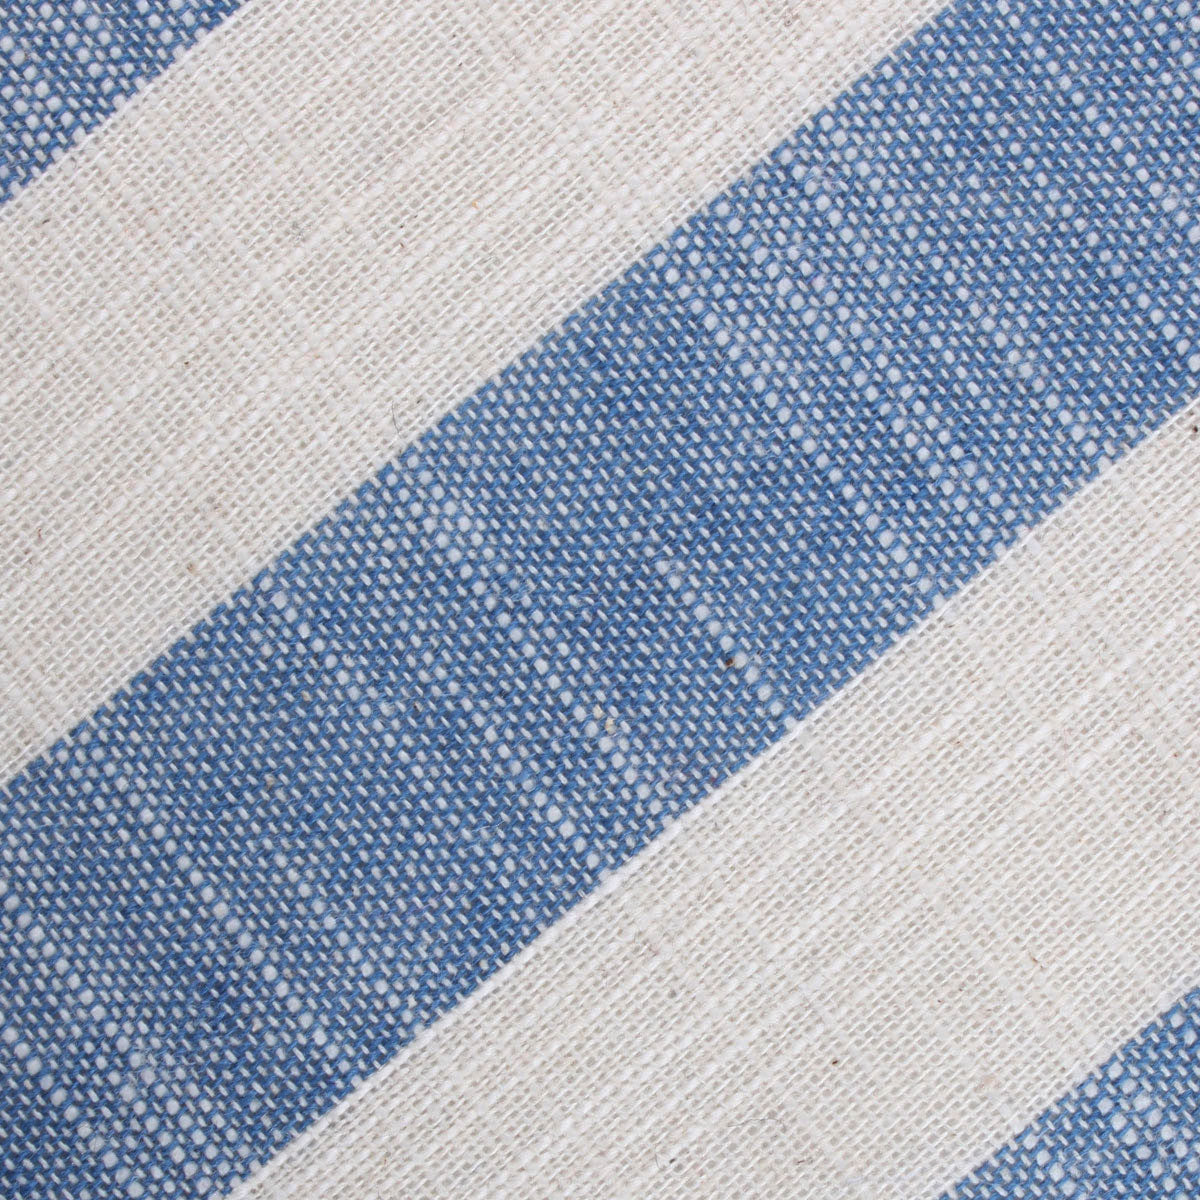 Kara Ada Light Blue Striped Linen Fabric Pocket Square